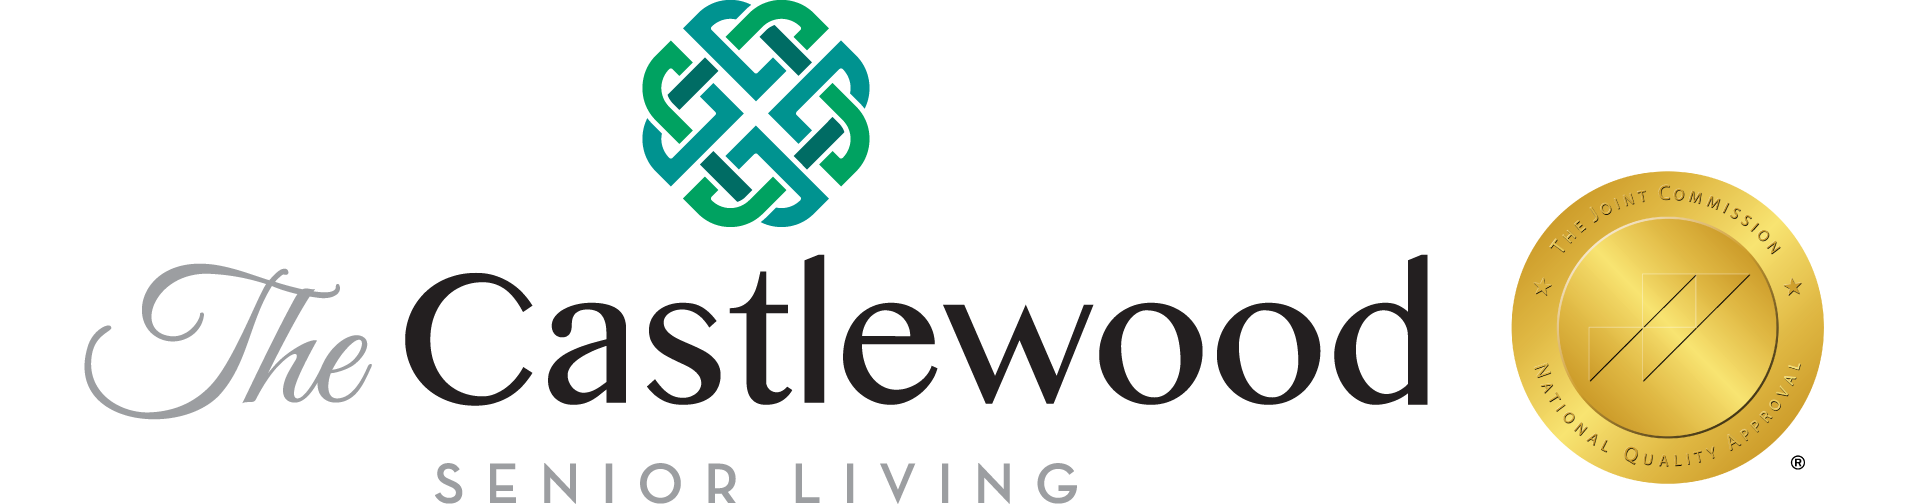 The Castlewood Senior Living - Joint Commission Award Badge